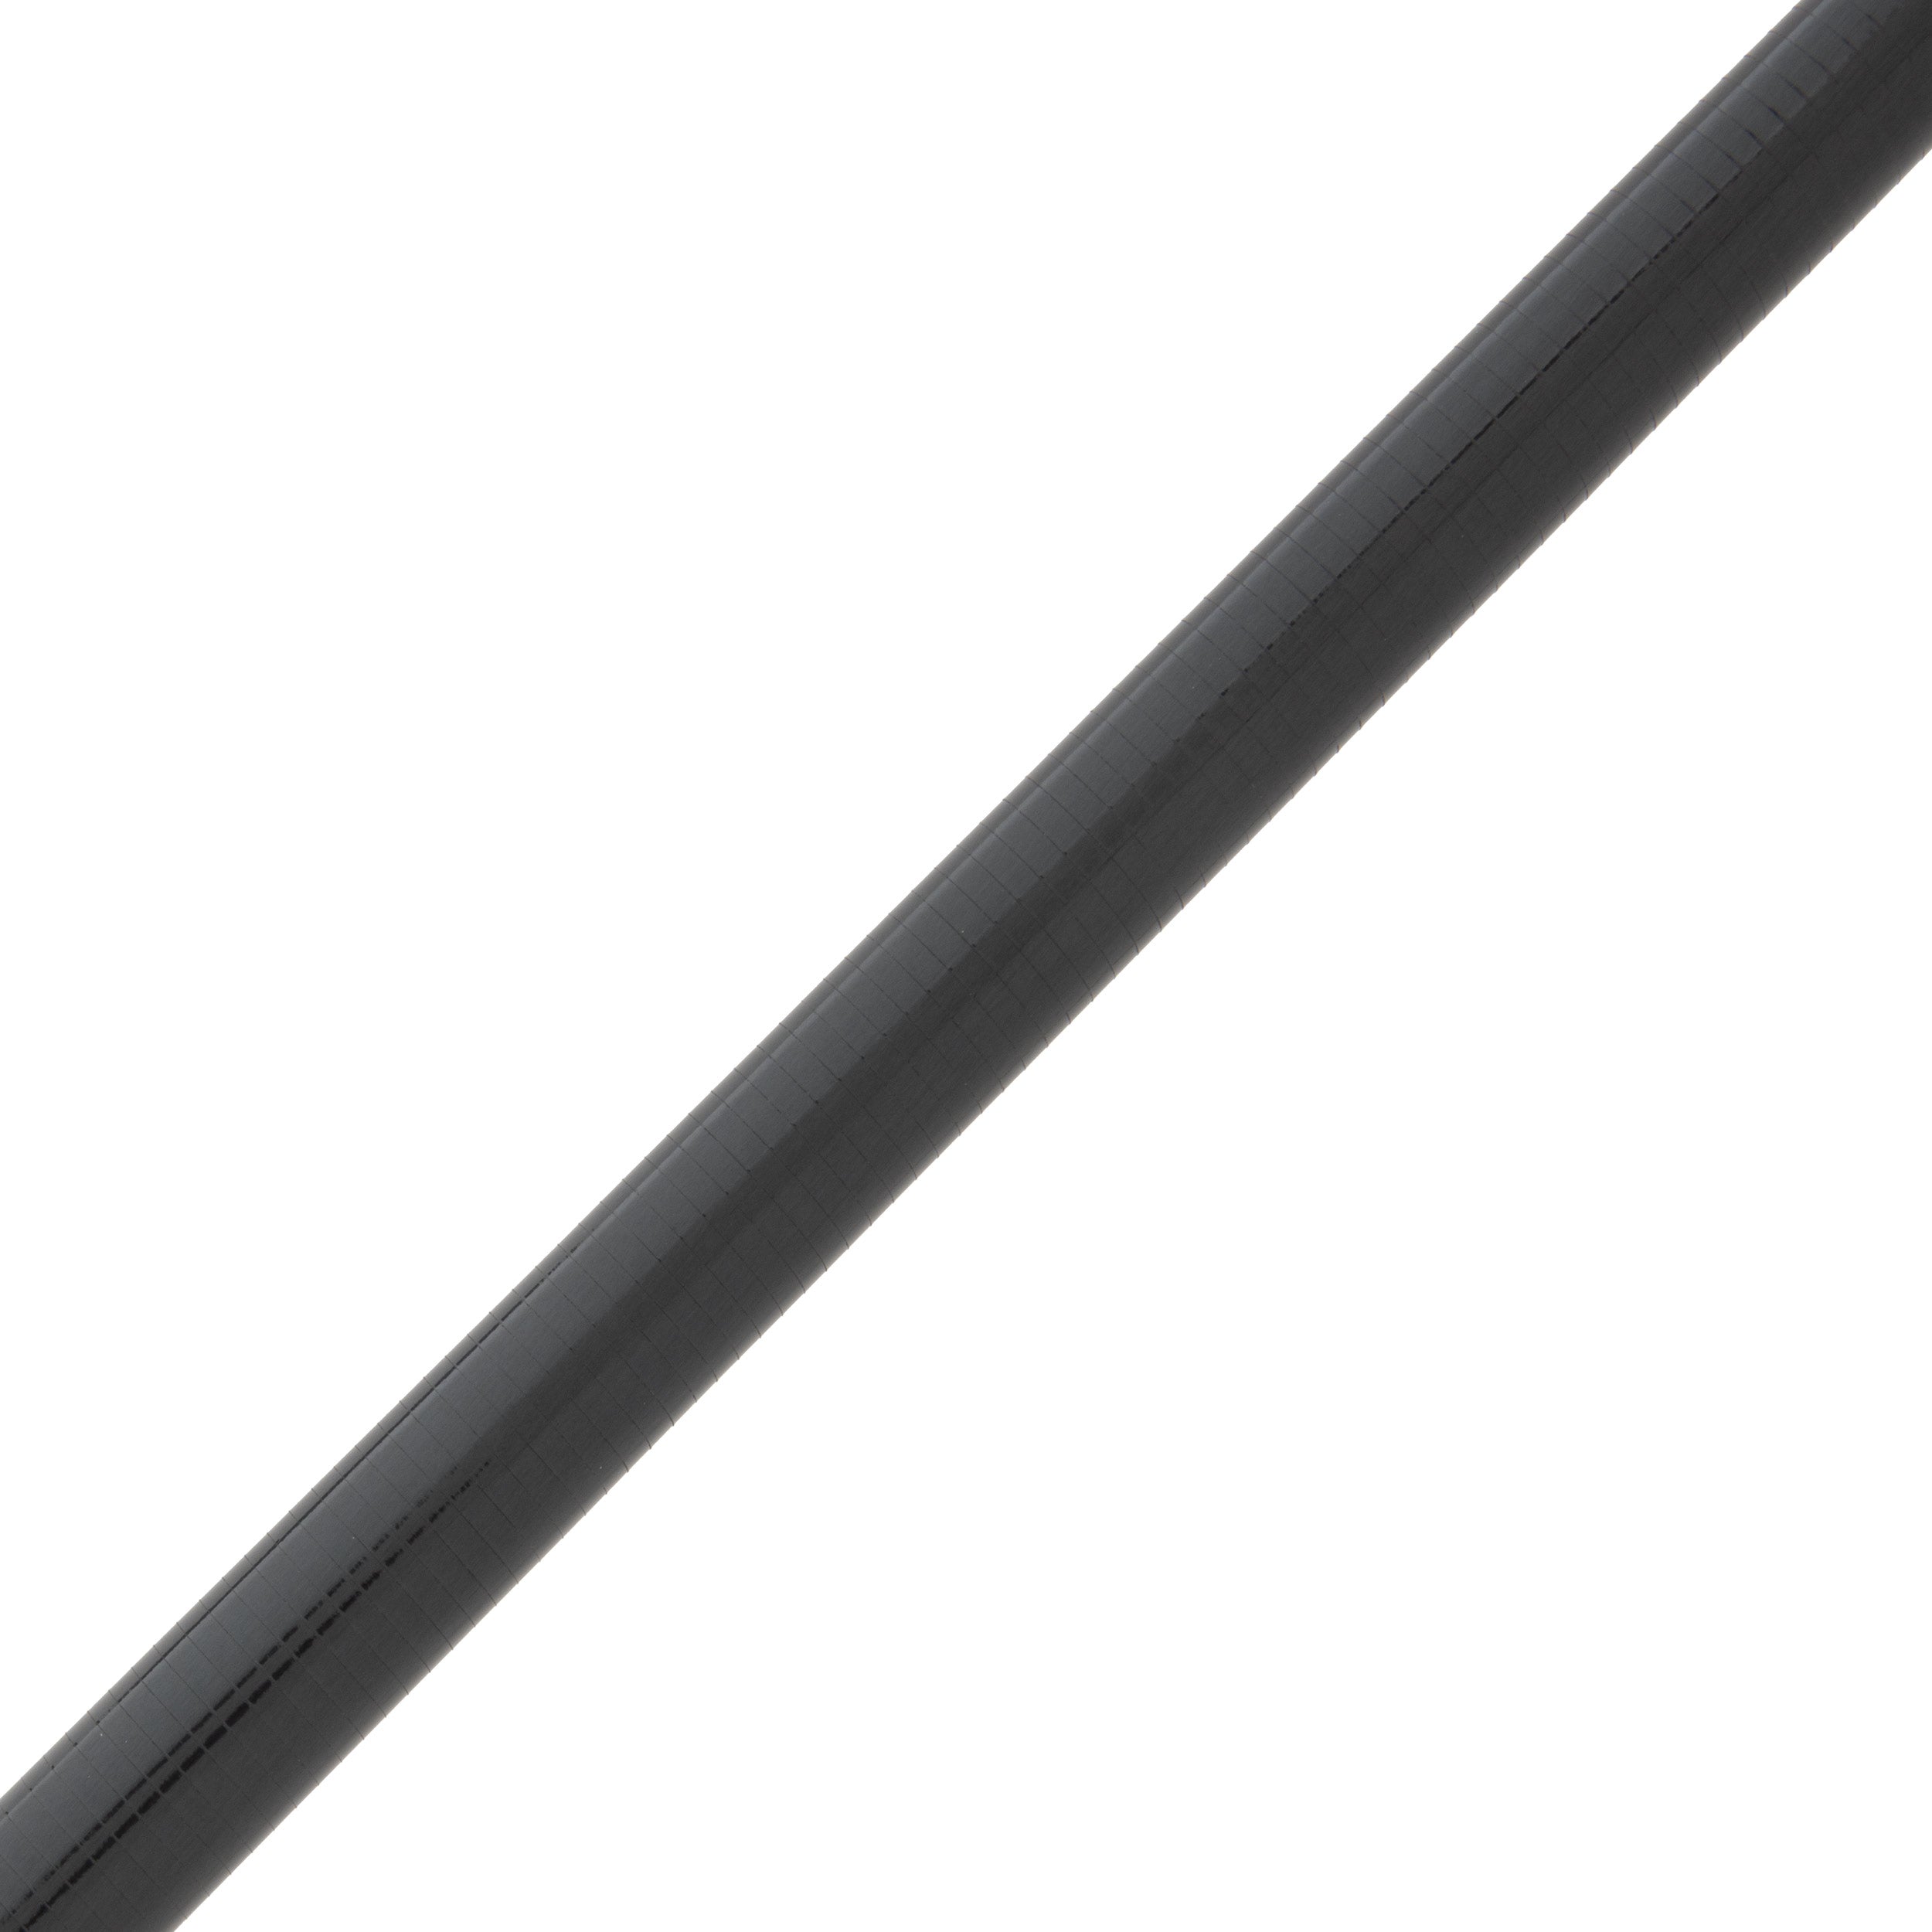 Cashion CR6r Carbon Fiber Popping Rod Blank - CR6r-iP842